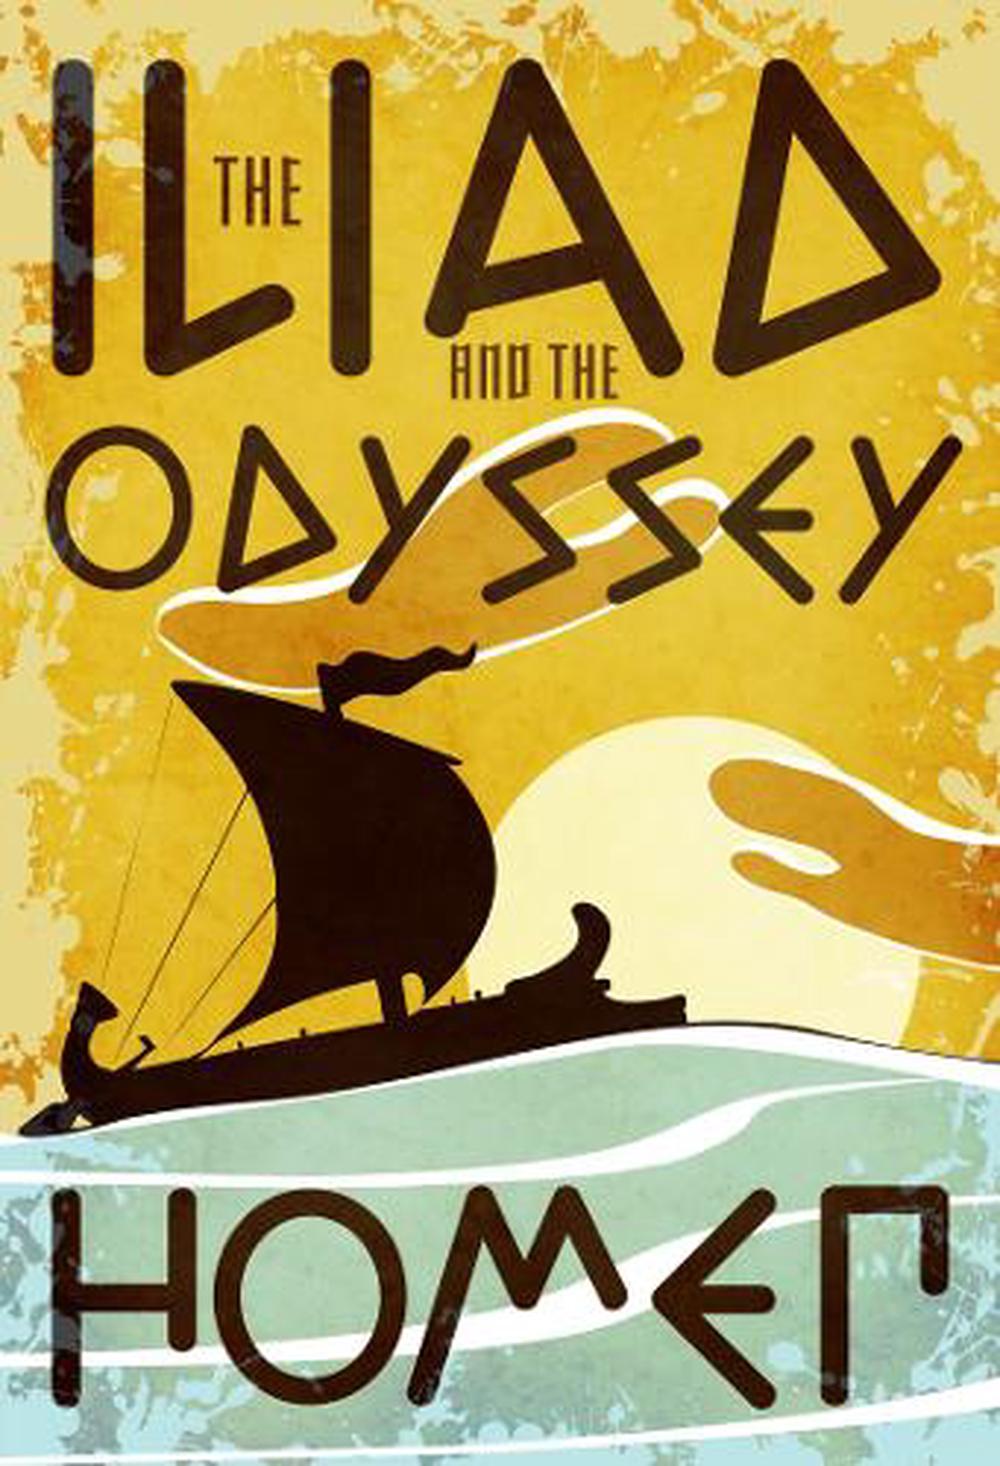 the iliad and odyssey story